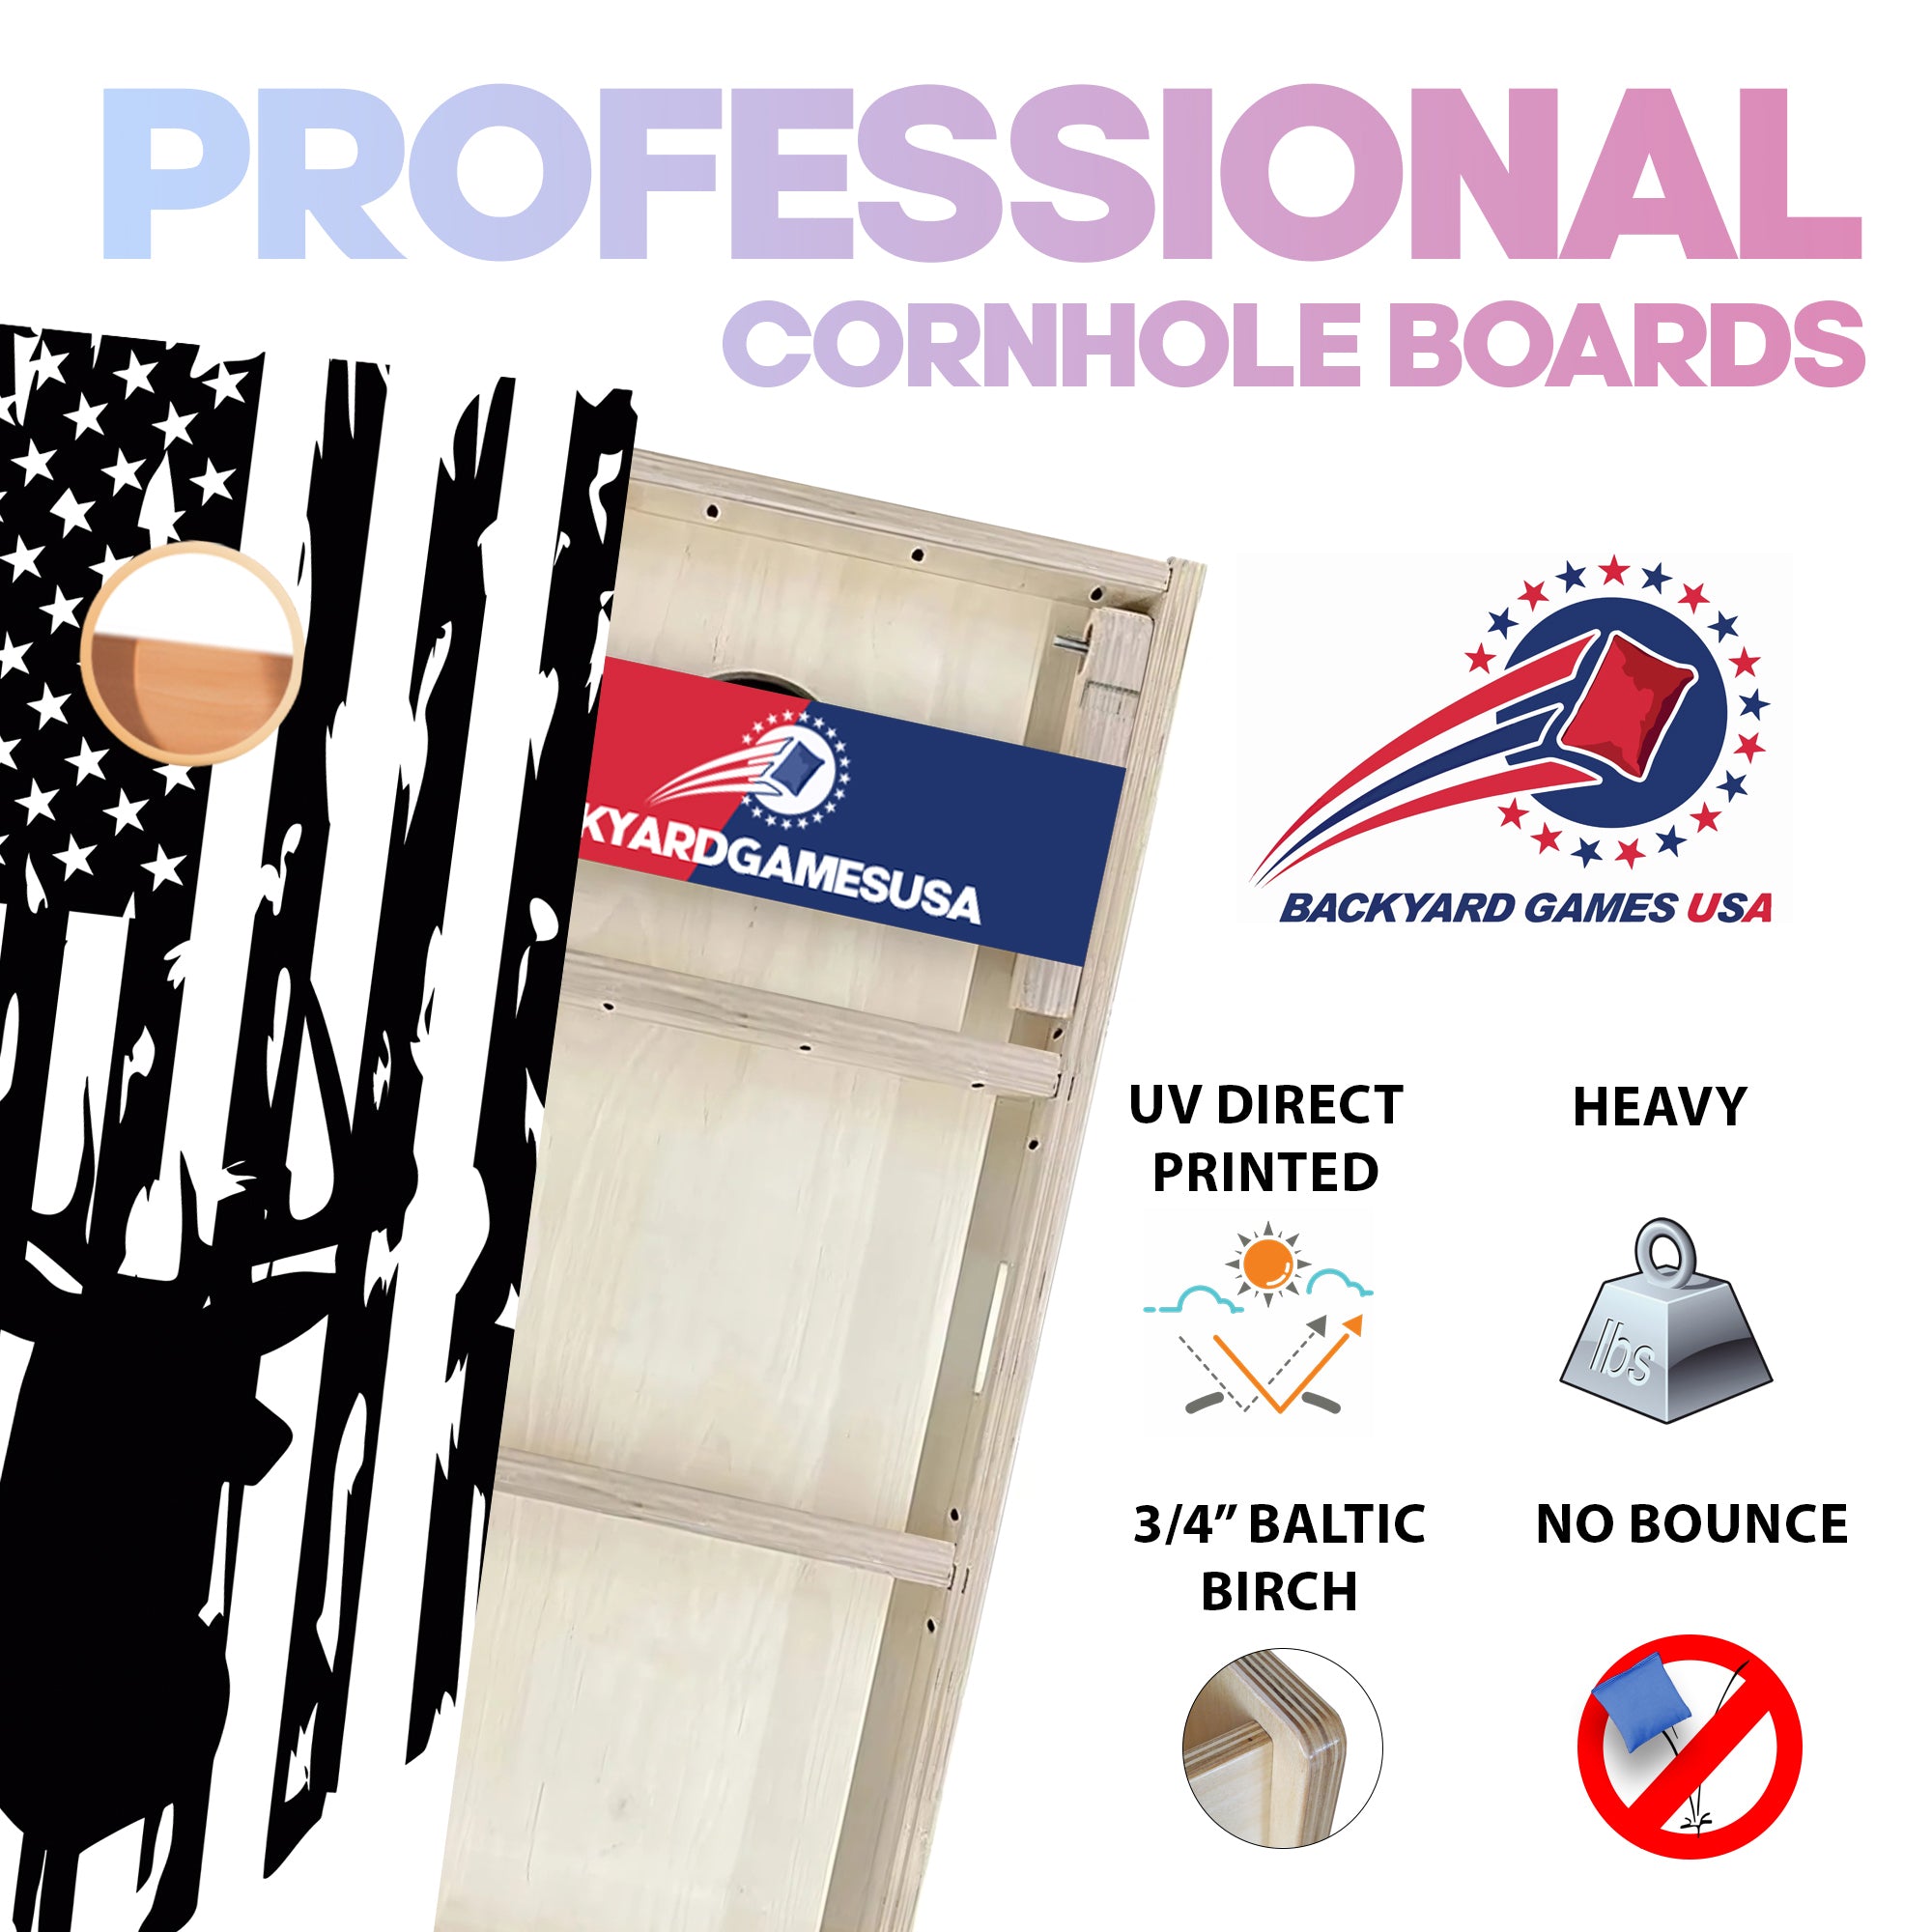 White Deer Professional Cornhole Boards